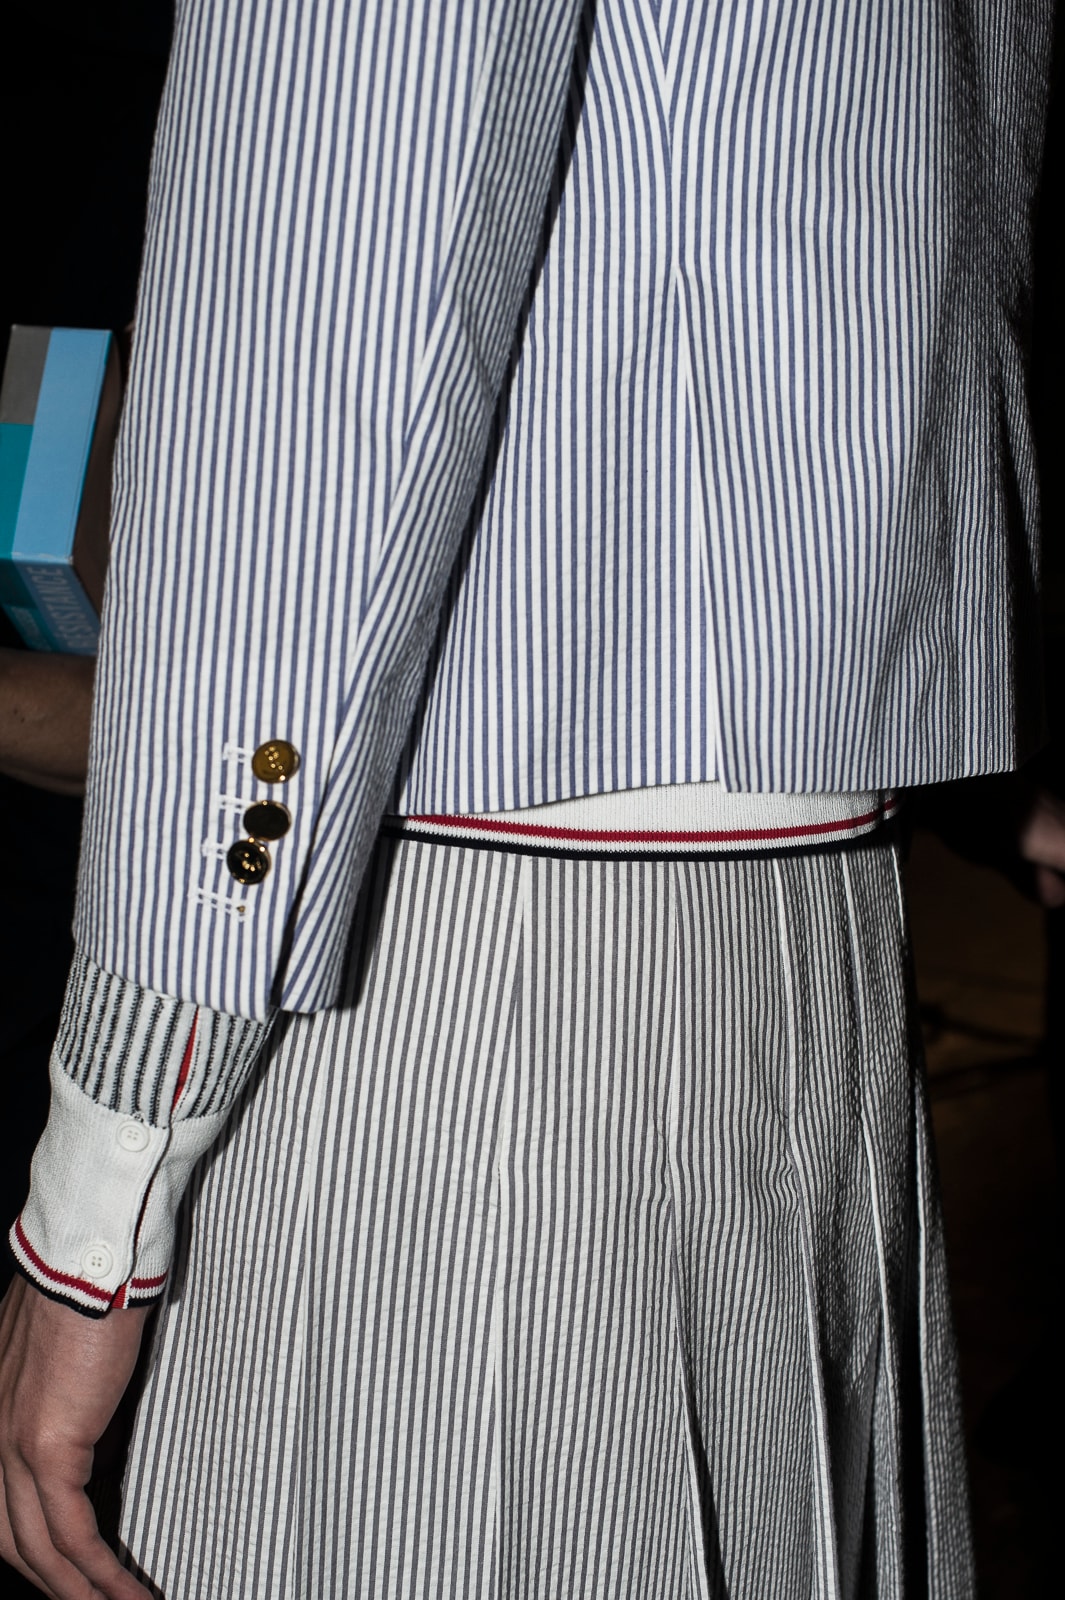 Thom Browne Paris Fashion Week Men's Luxury Suiting Apparel Blazers Trousers